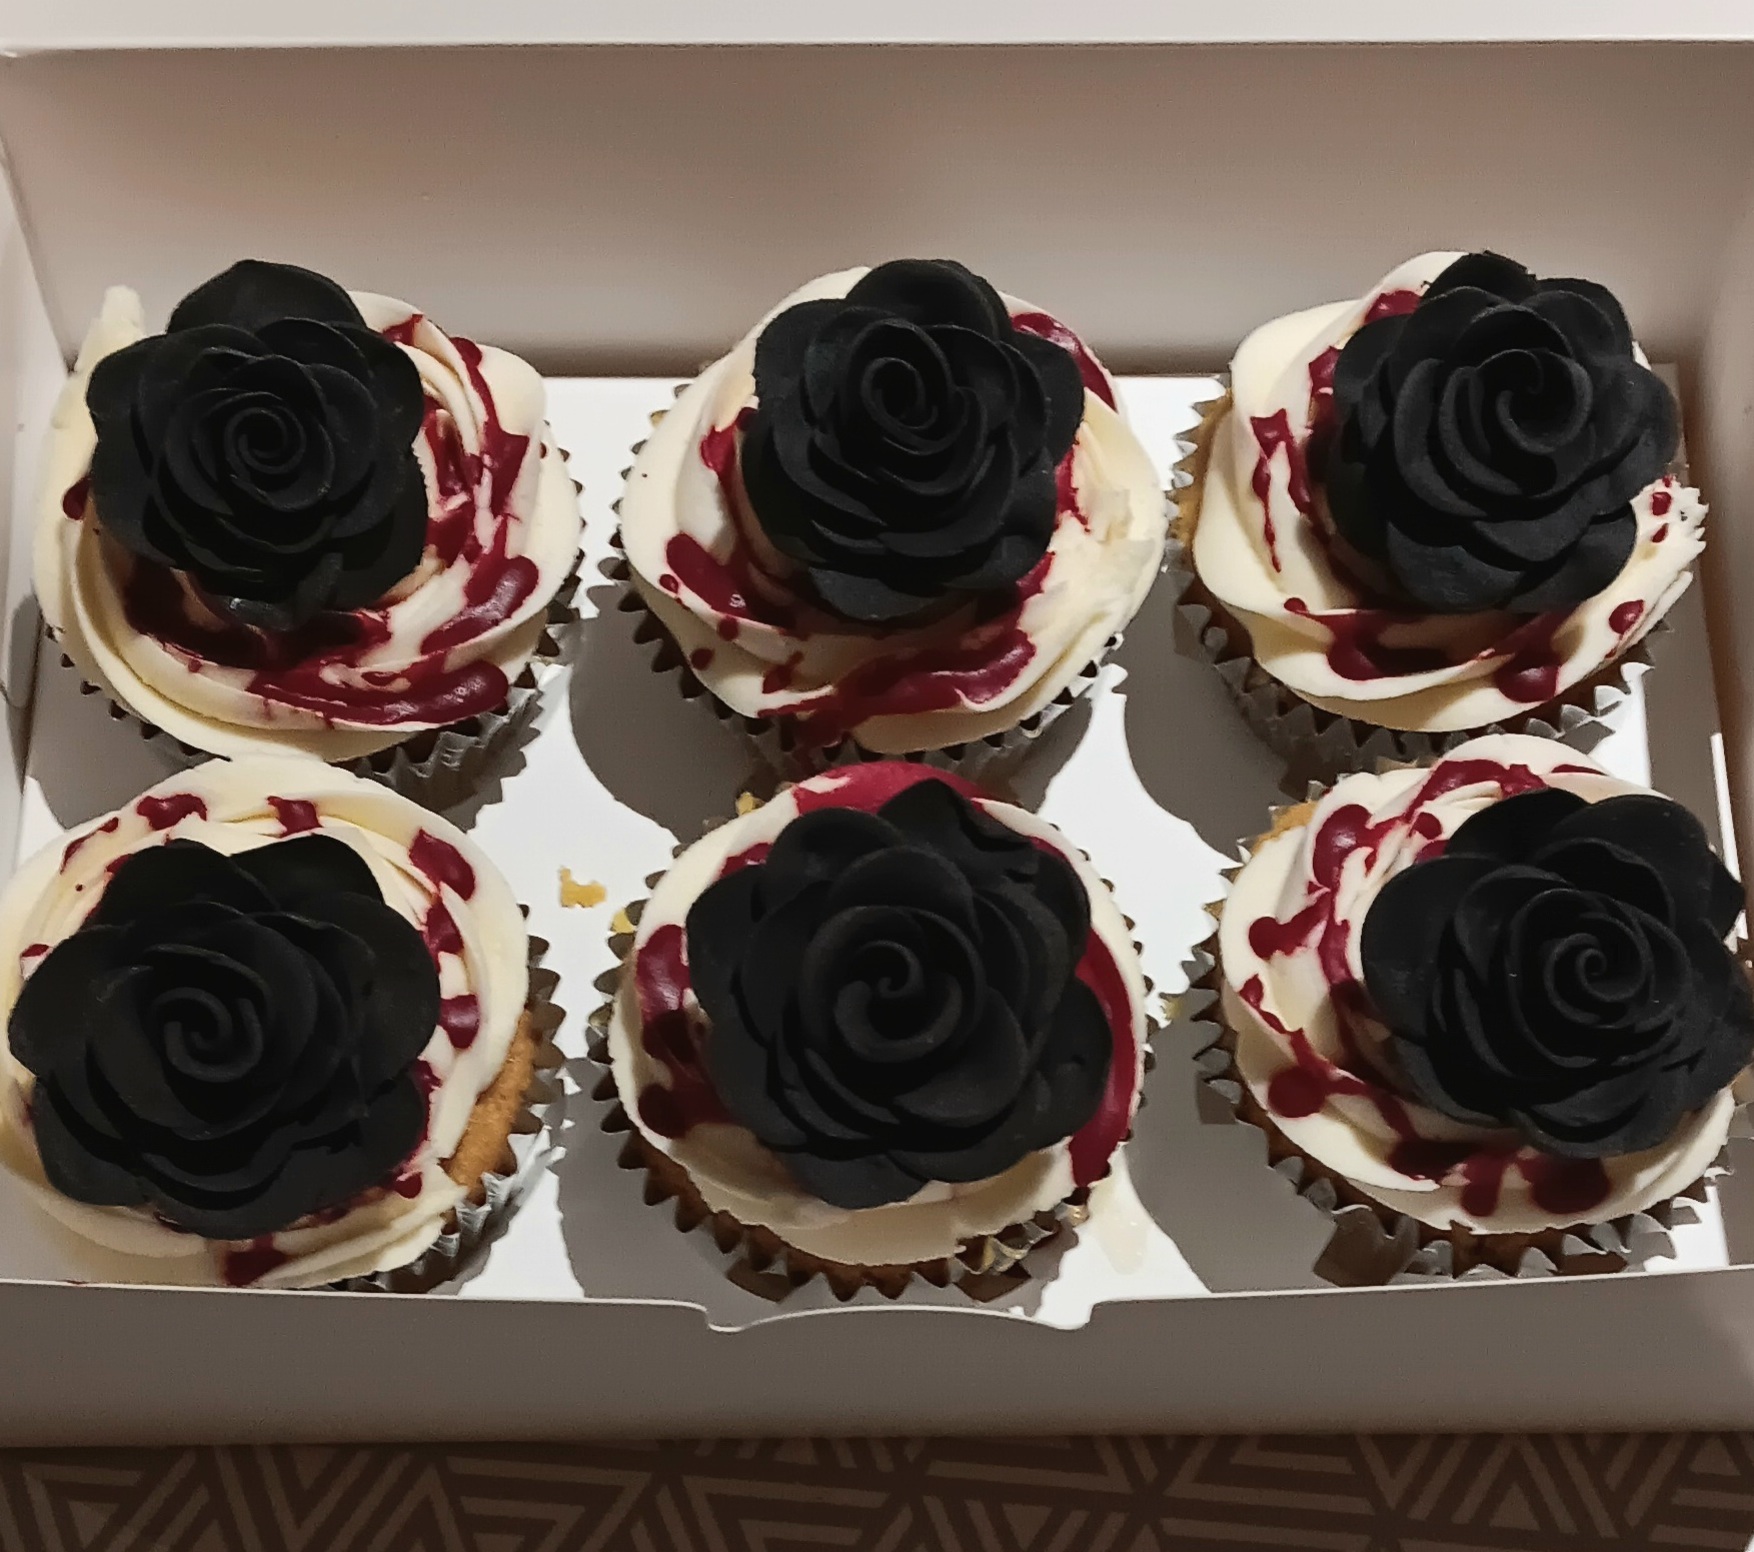 Black "Gothic" style rose cupcakes